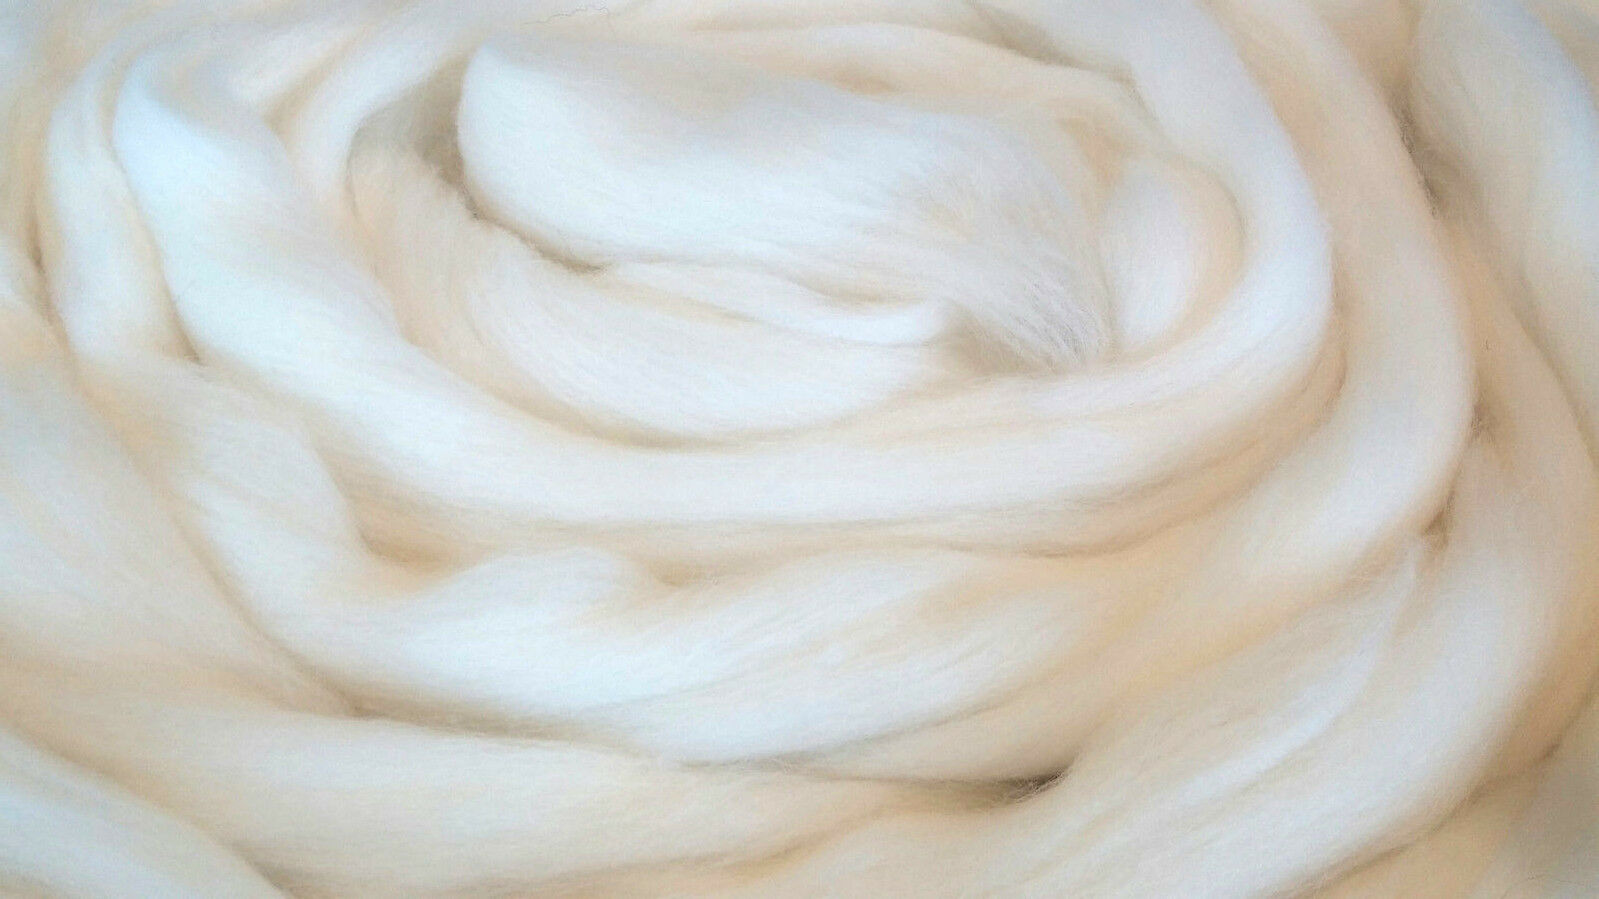 1 Lb Wool Roving, Merino  23 Mic Top Roving Fiber Spinning Felting, Felting Wool